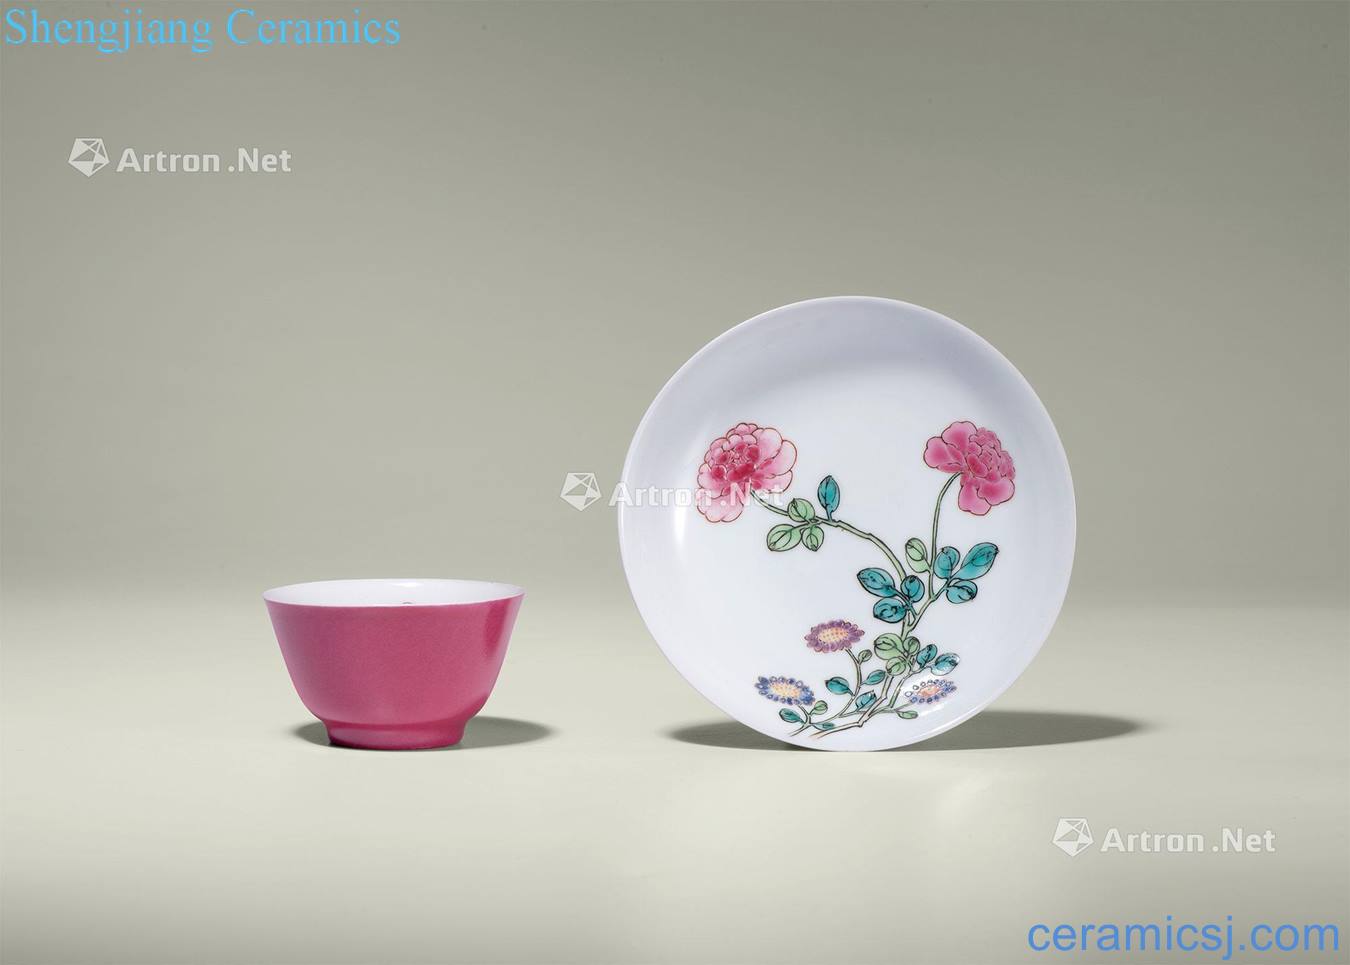 Qing yongzheng carmine pastel flowers pattern plates